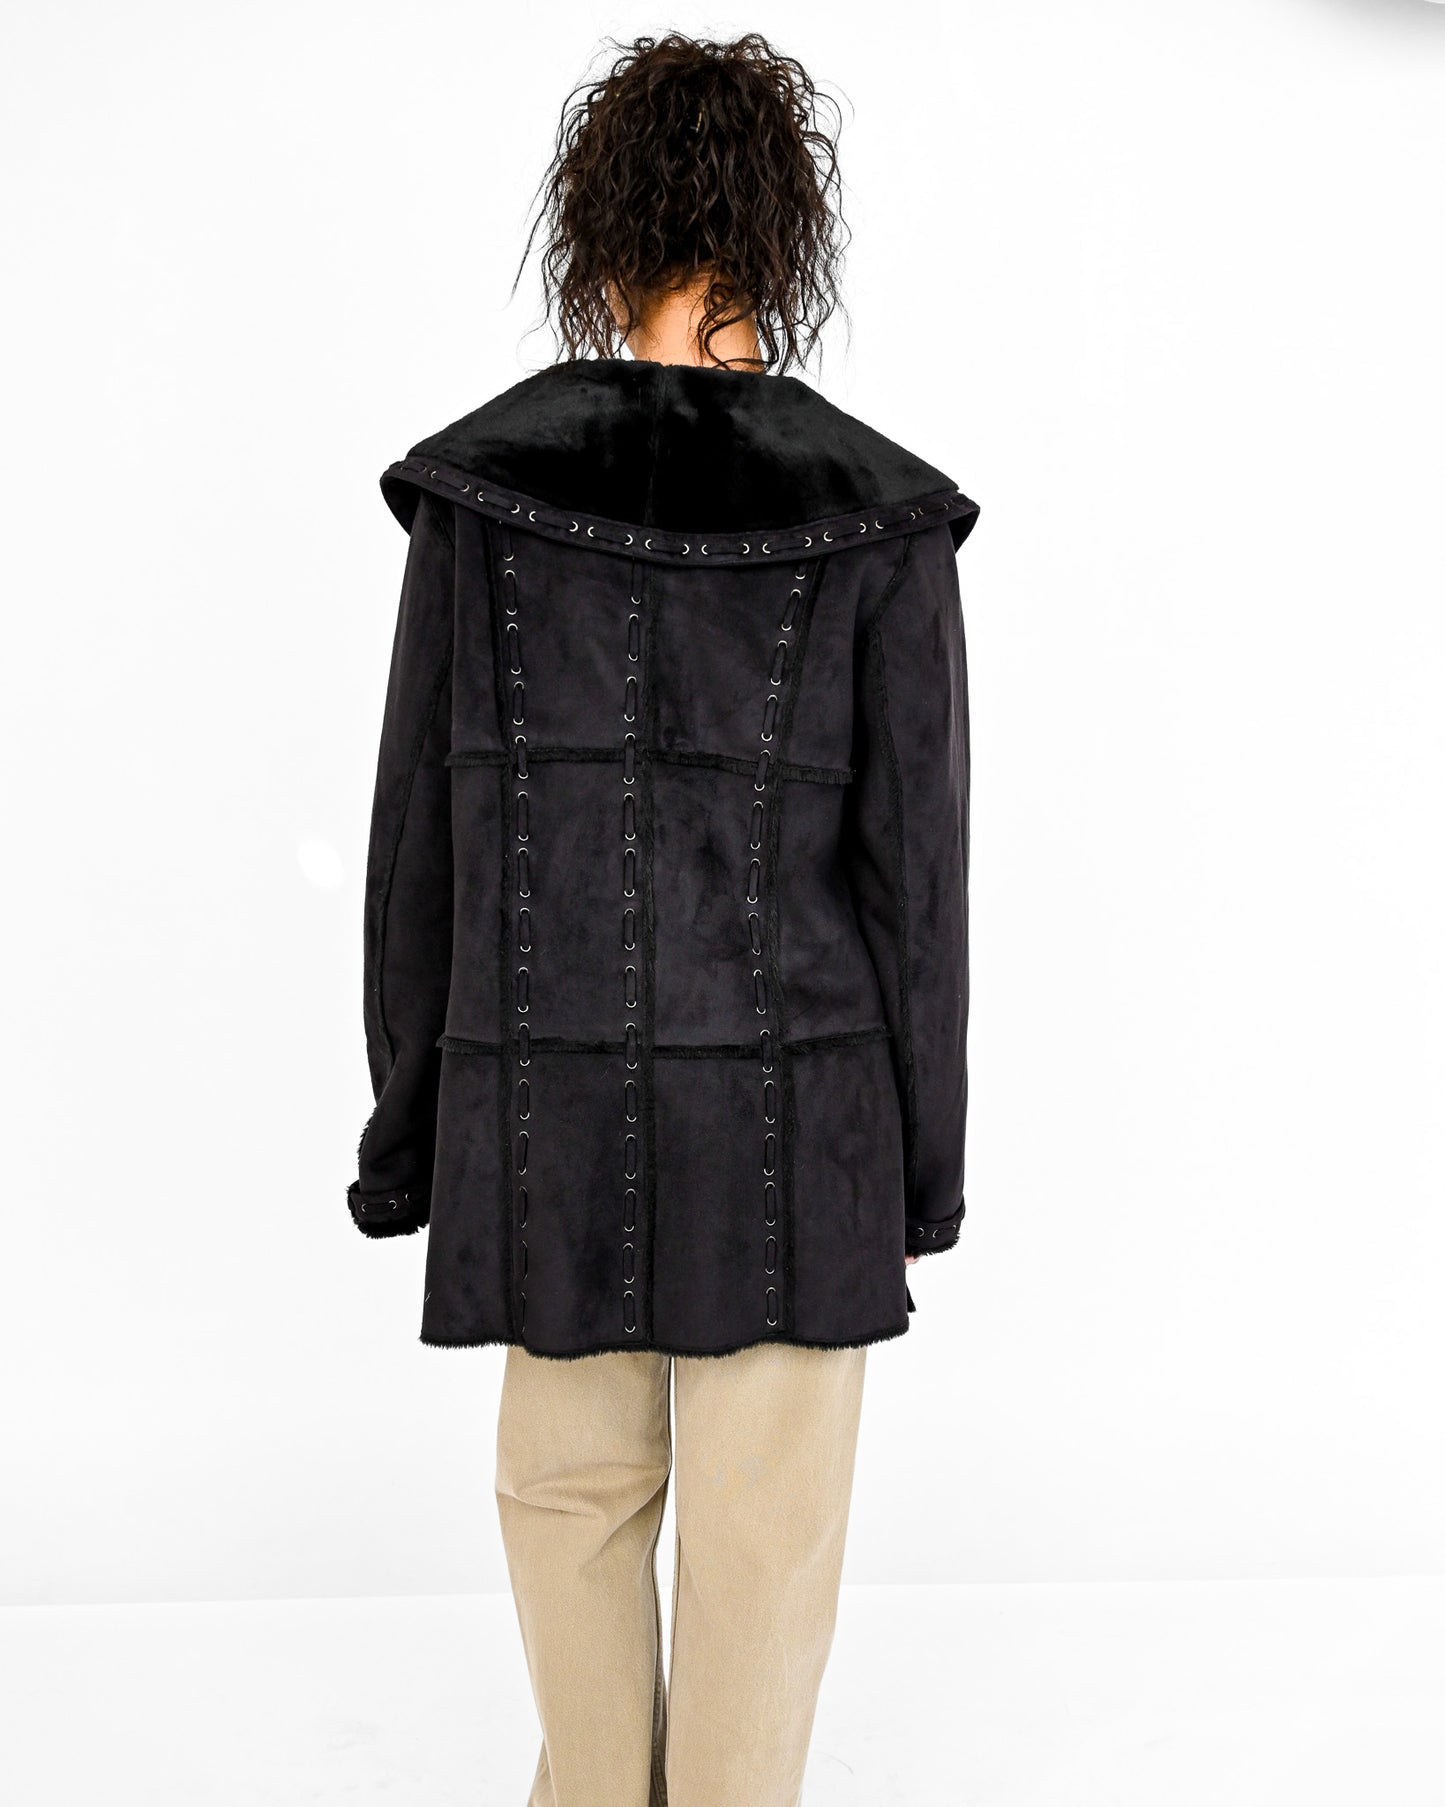 Black Lace-Up Faux Shearling Coat (M)